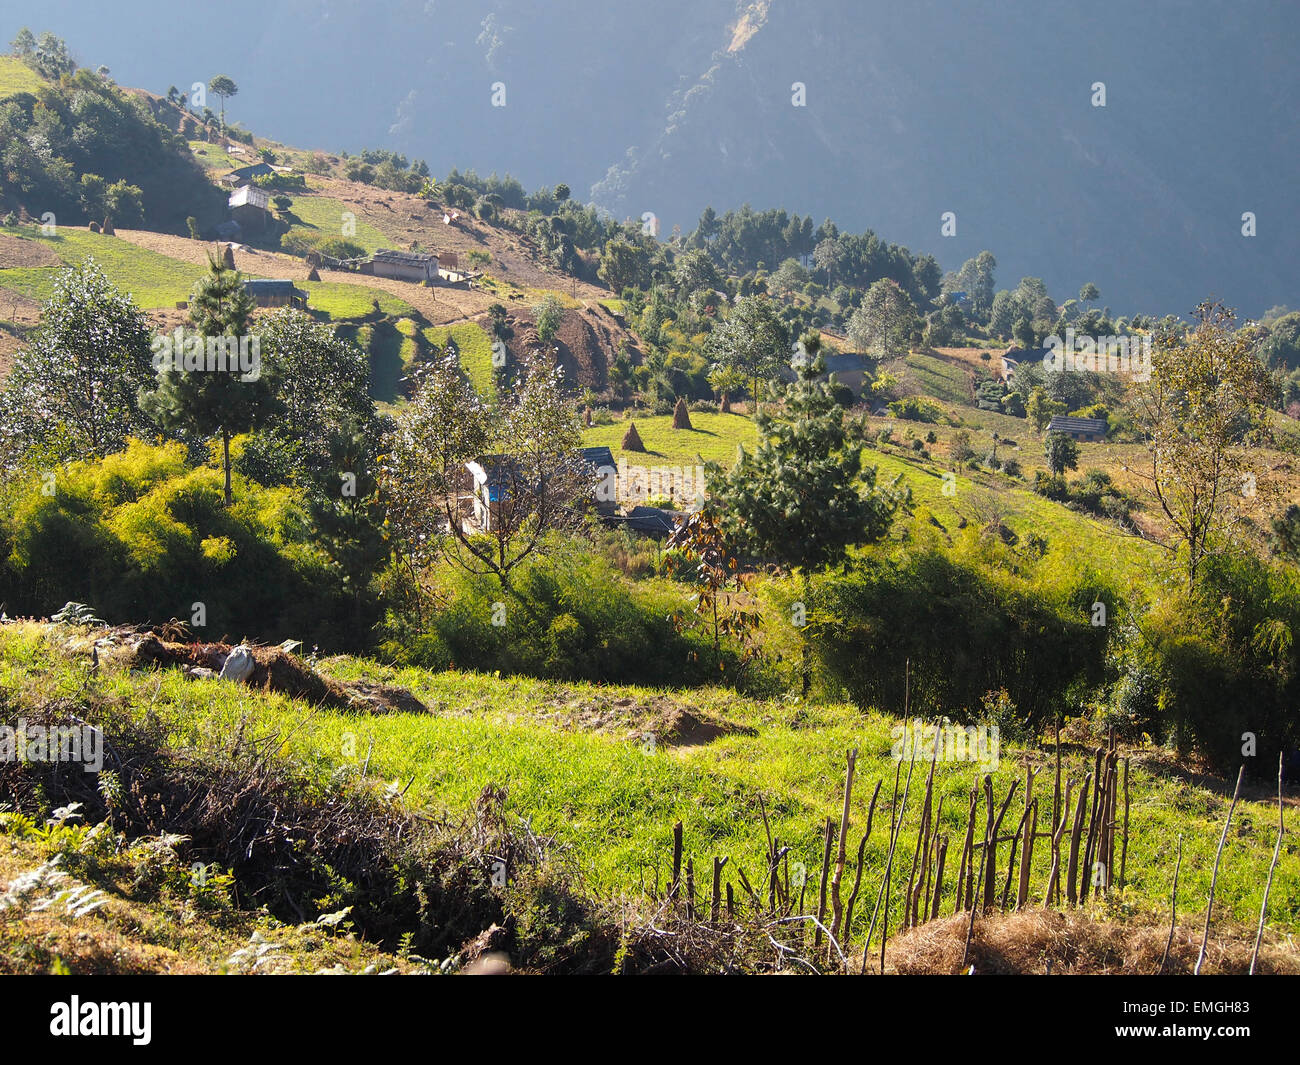 Fruchtbaren gebirgigen Landwirtschaft Felder Lukla Nepal Asien Stockfoto